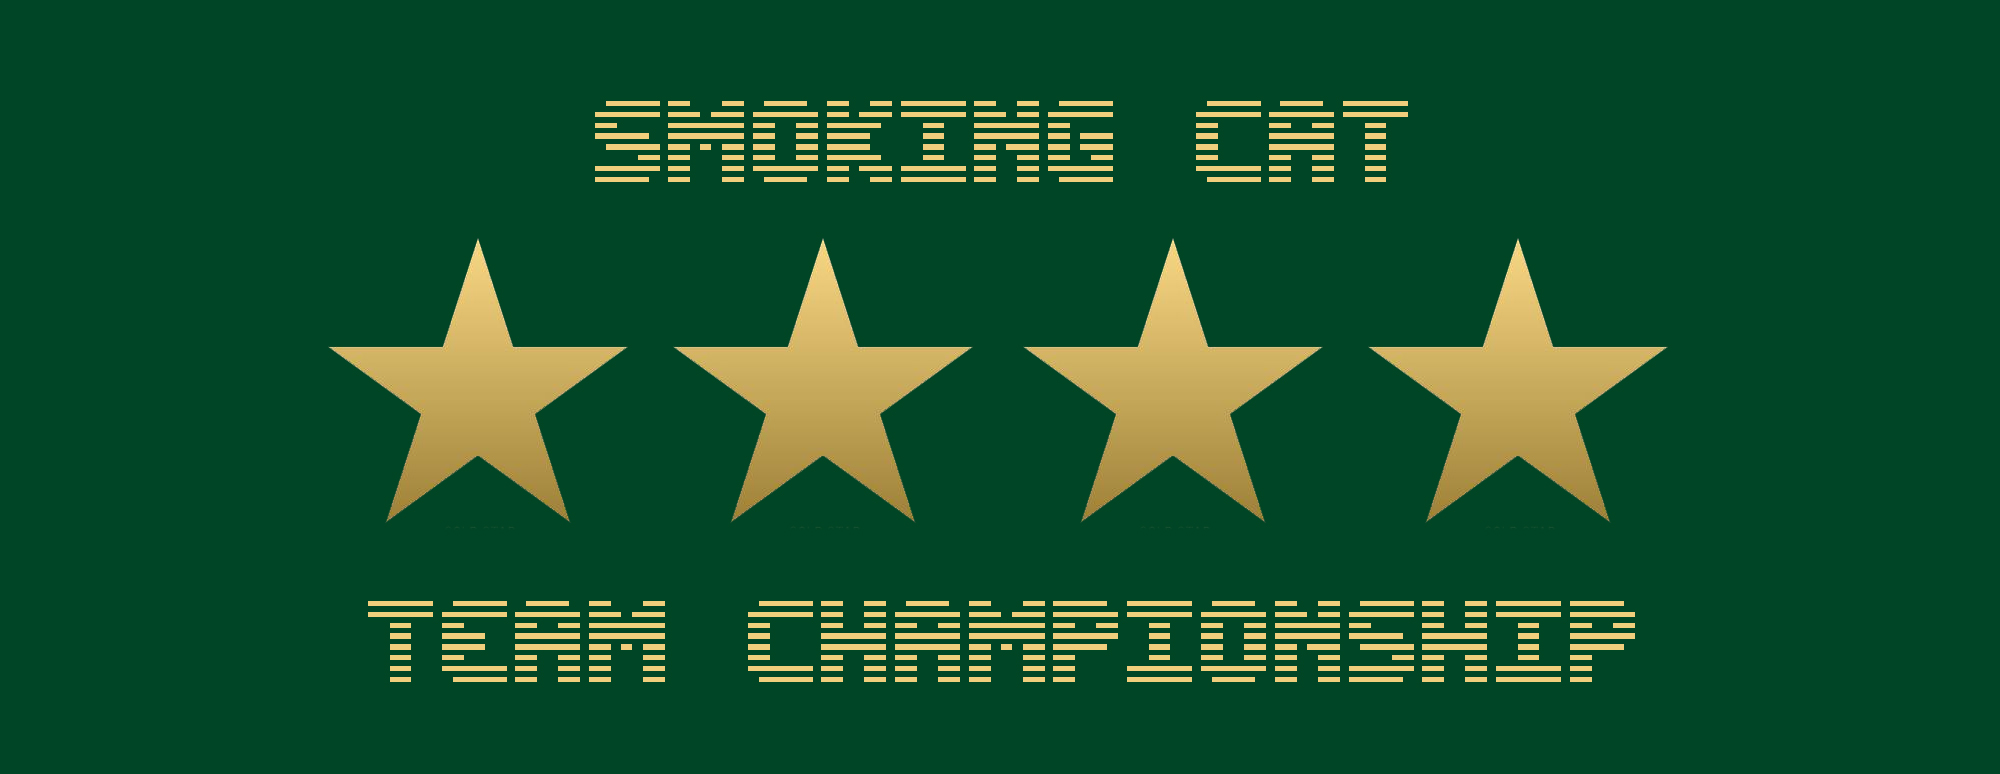 Smoking Cat Team Championship